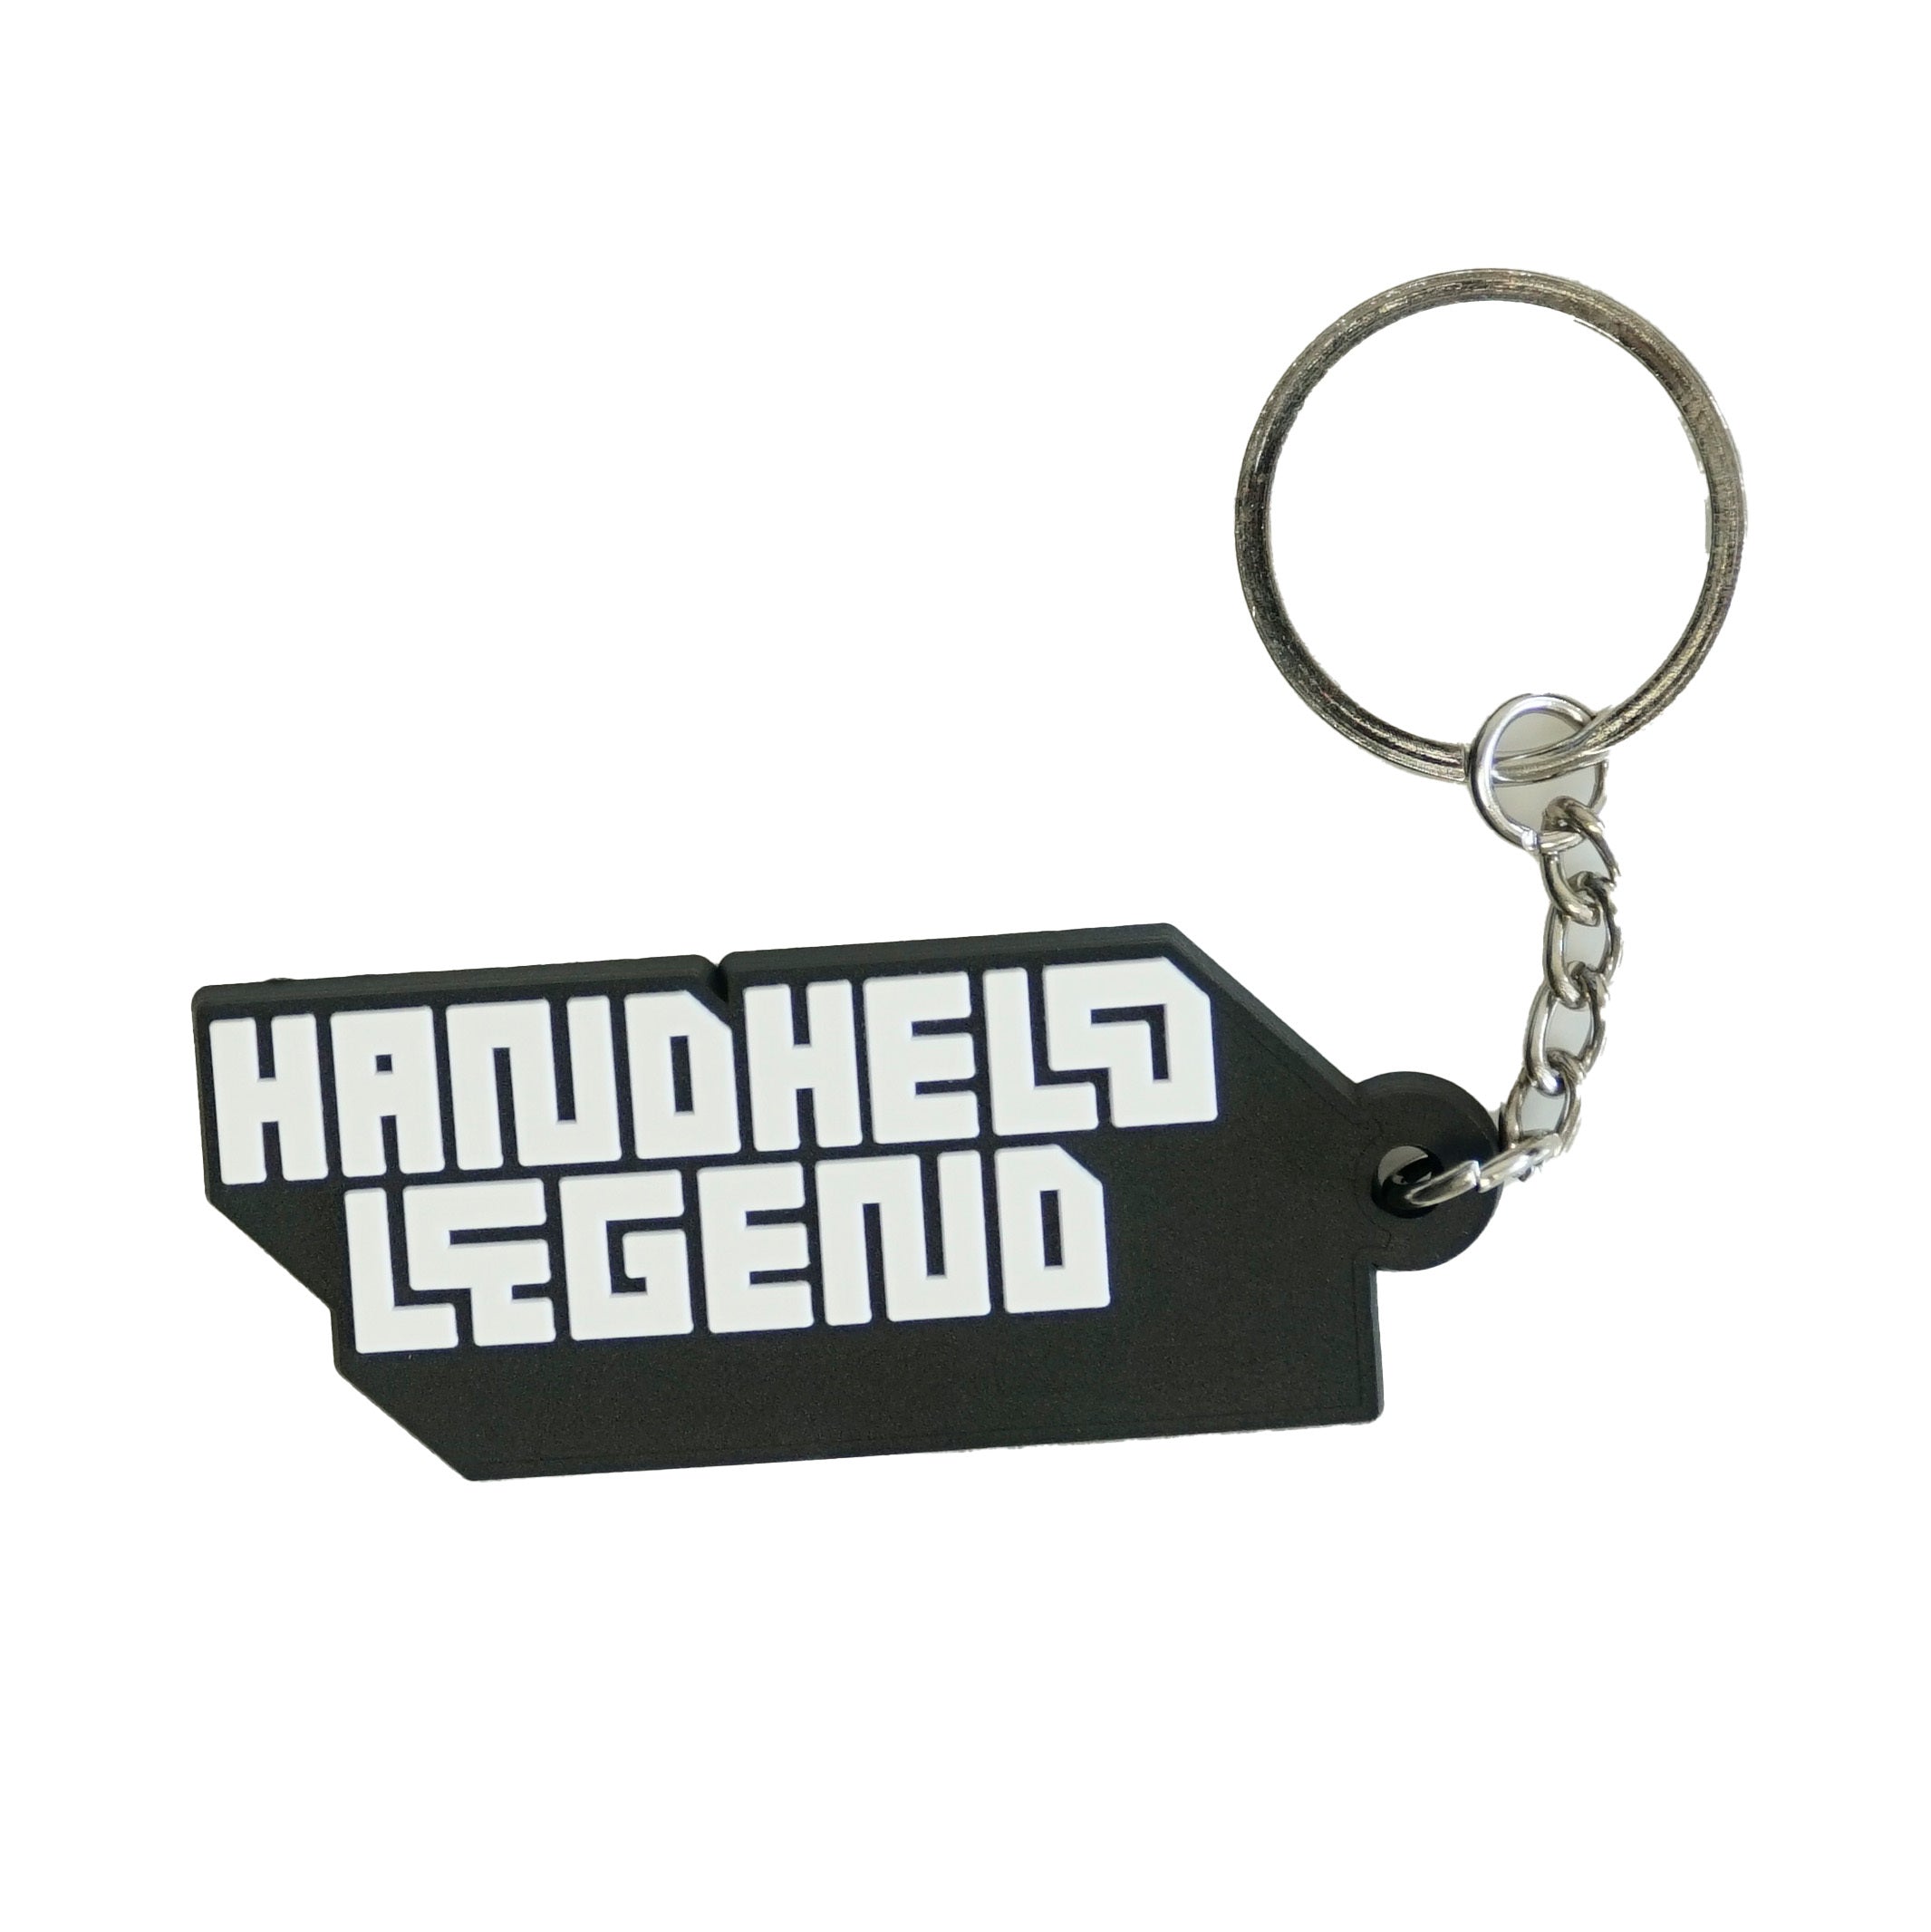 HHL Logo Keychain Hand Held Legend